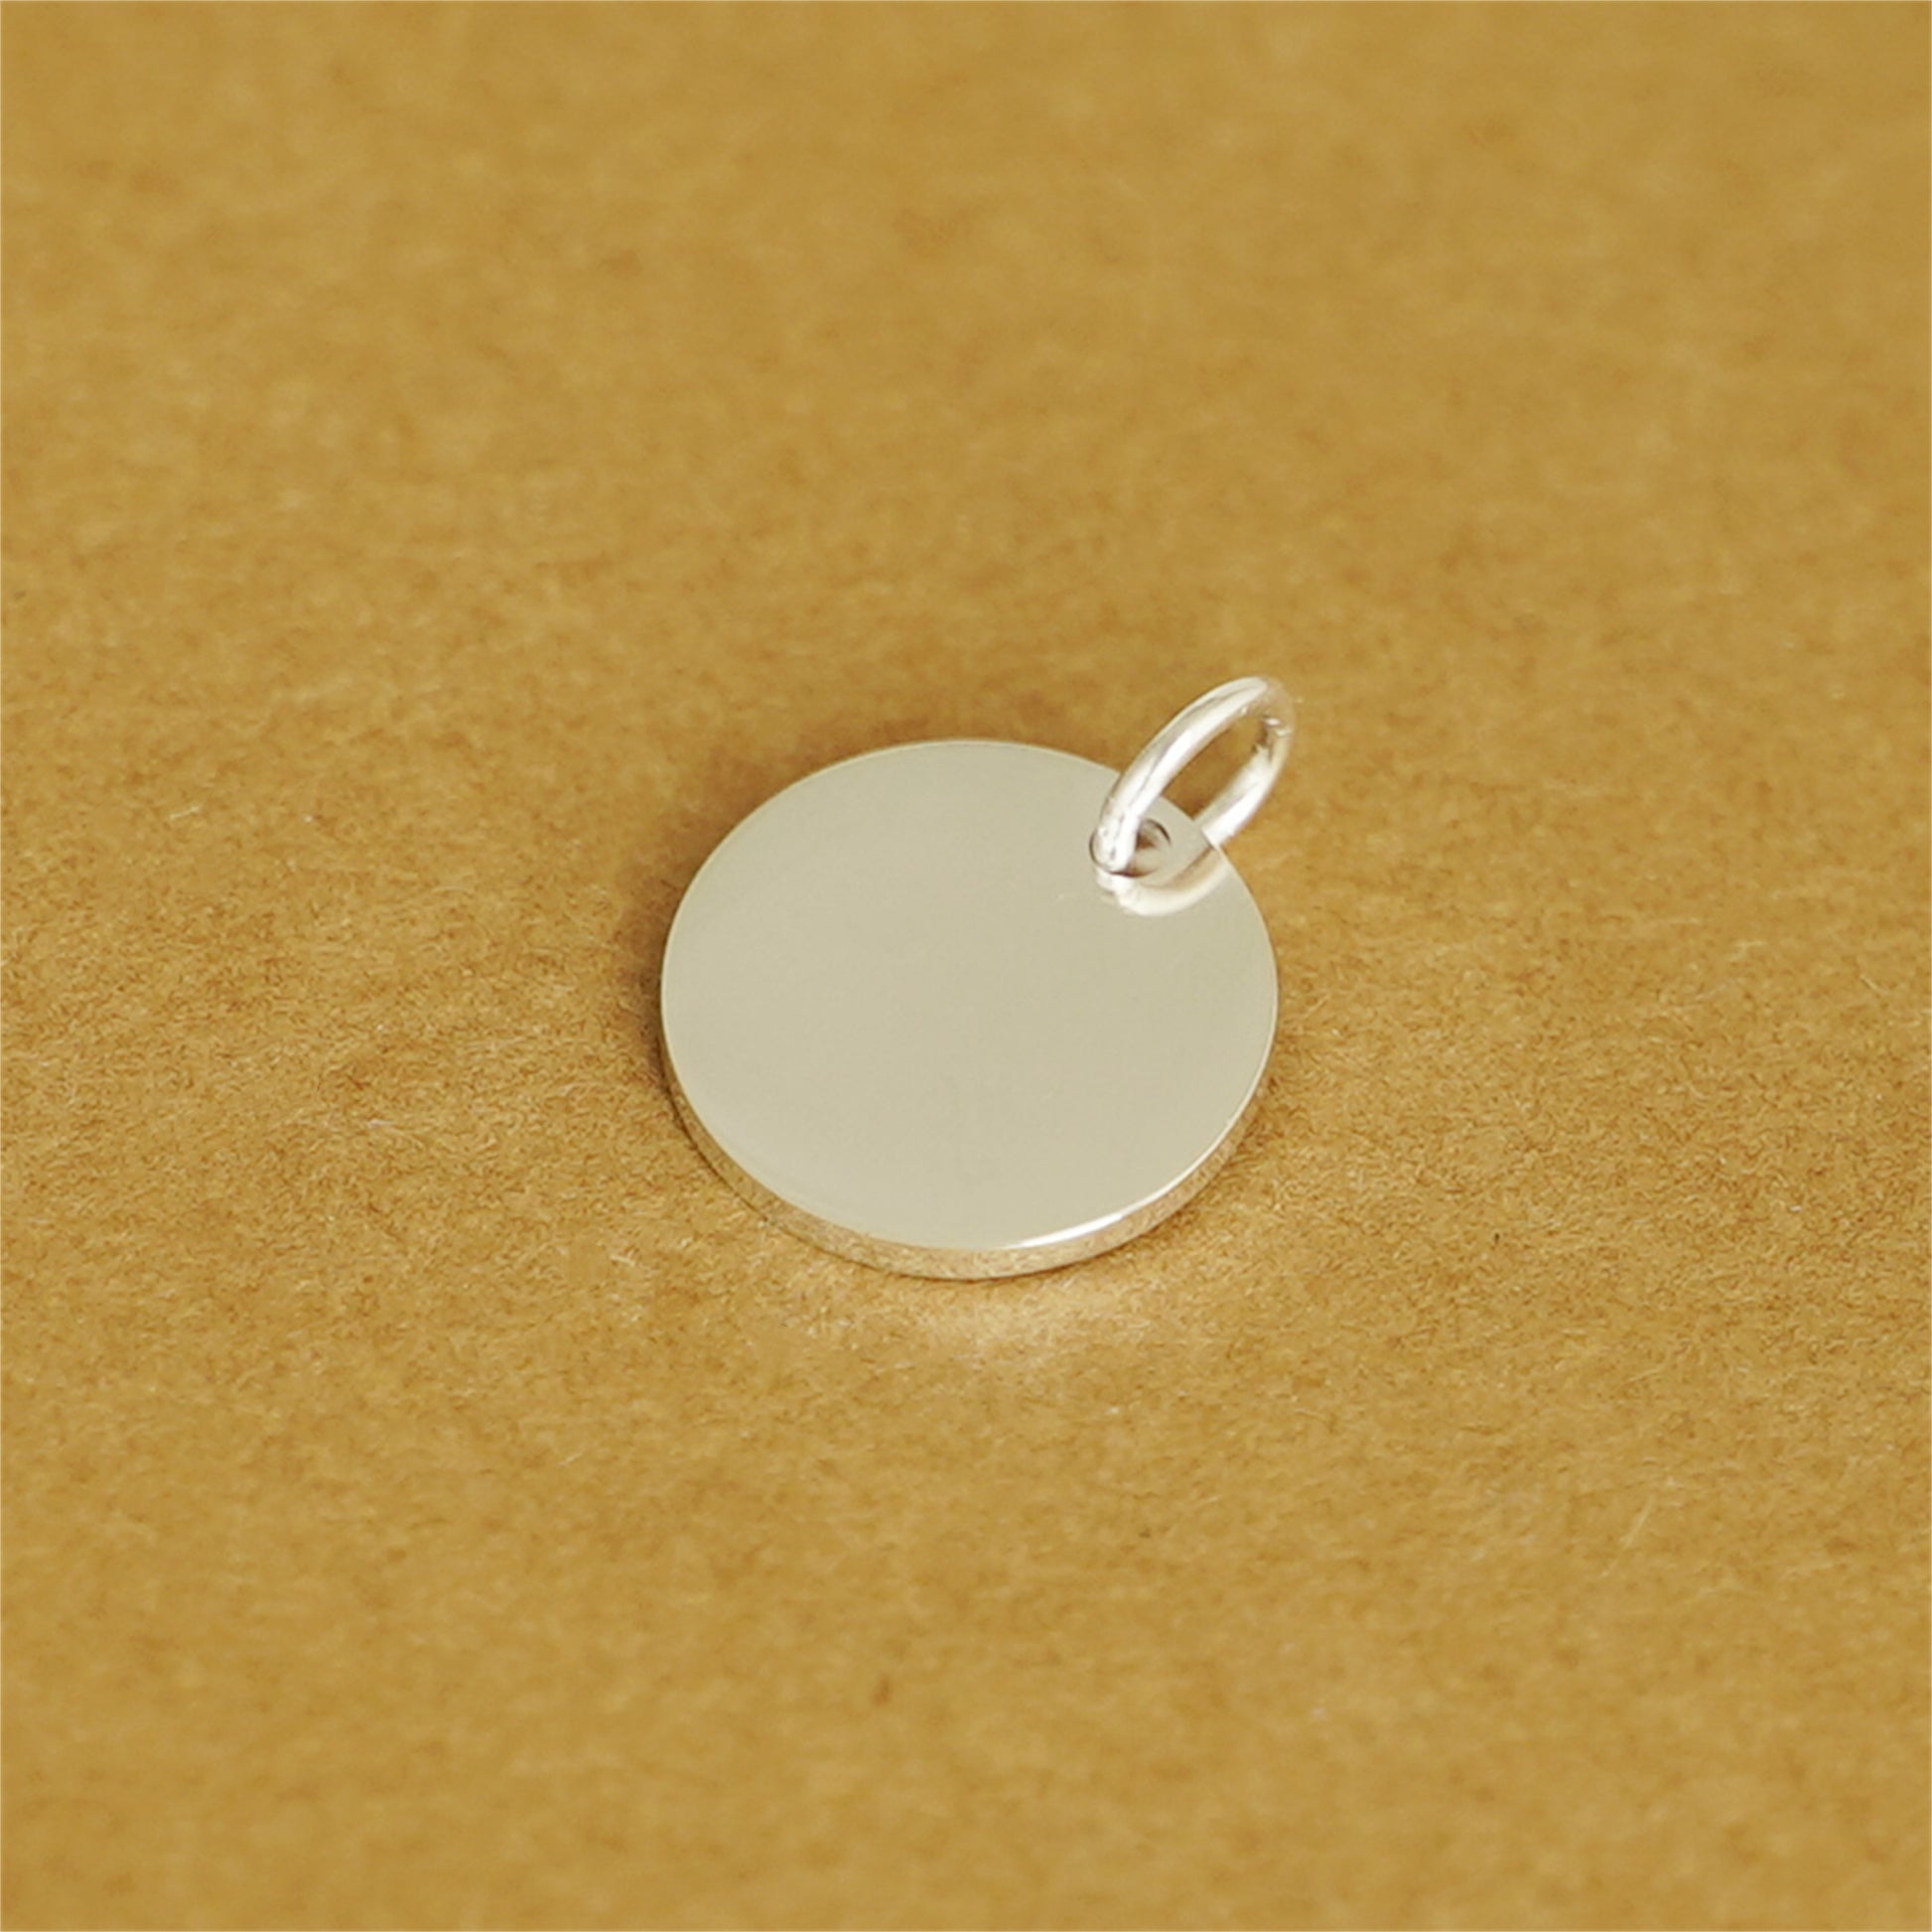 15mm Sterling Silver Plain Round Polished Circle Disc Charm Pendant - sugarkittenlondon